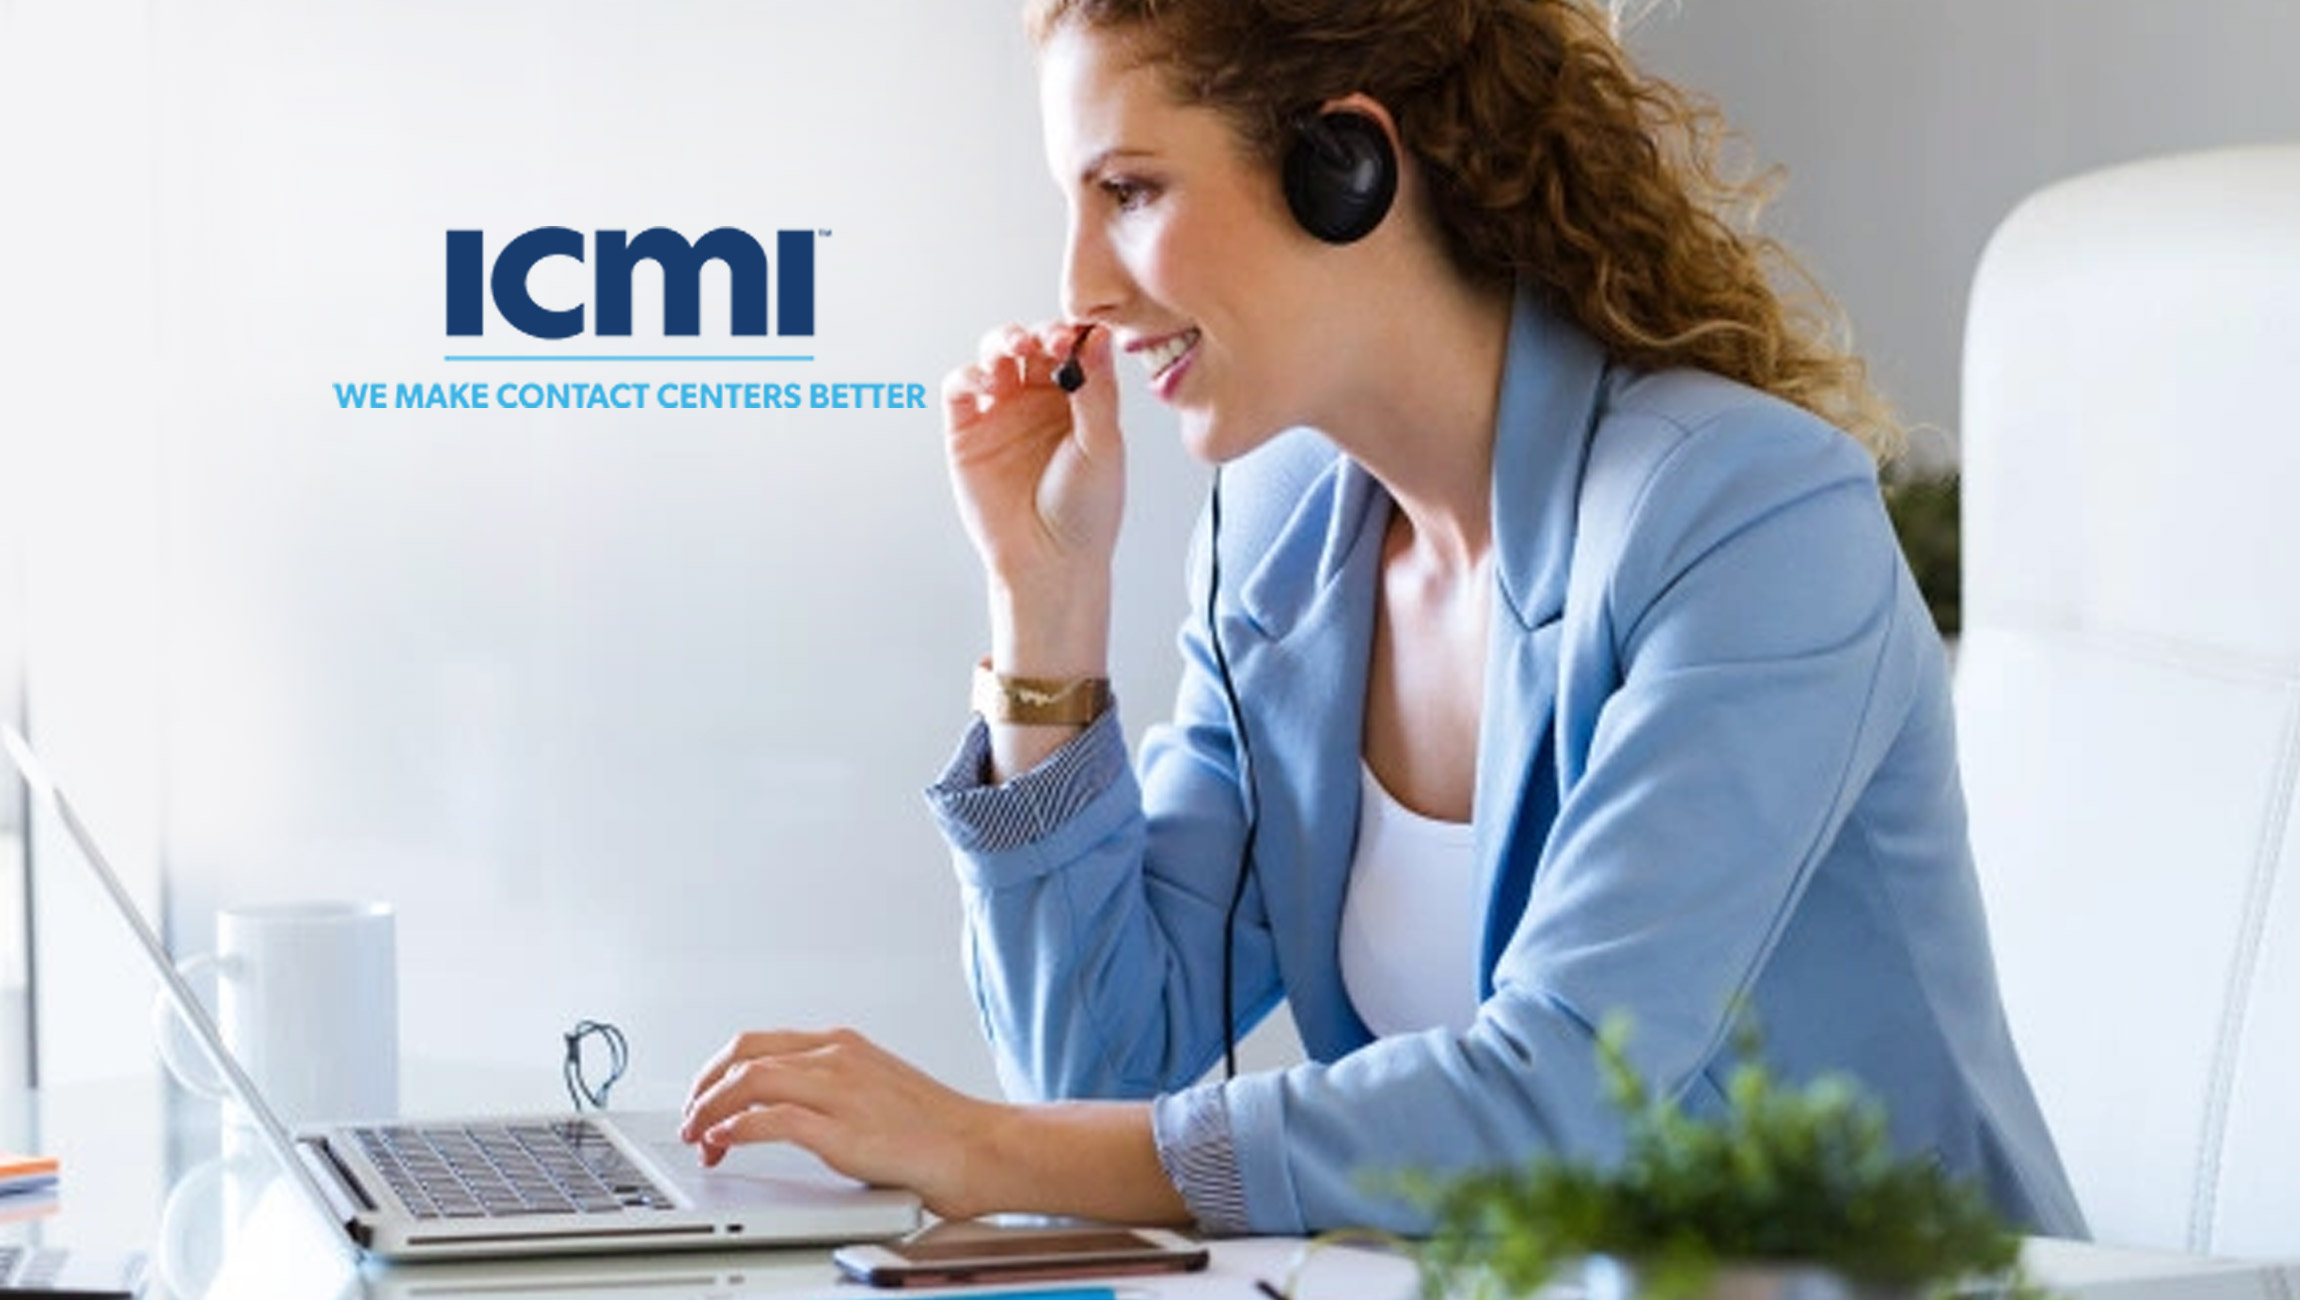 ICMI Announces ICMI Contact Center Expo a Digital Experience